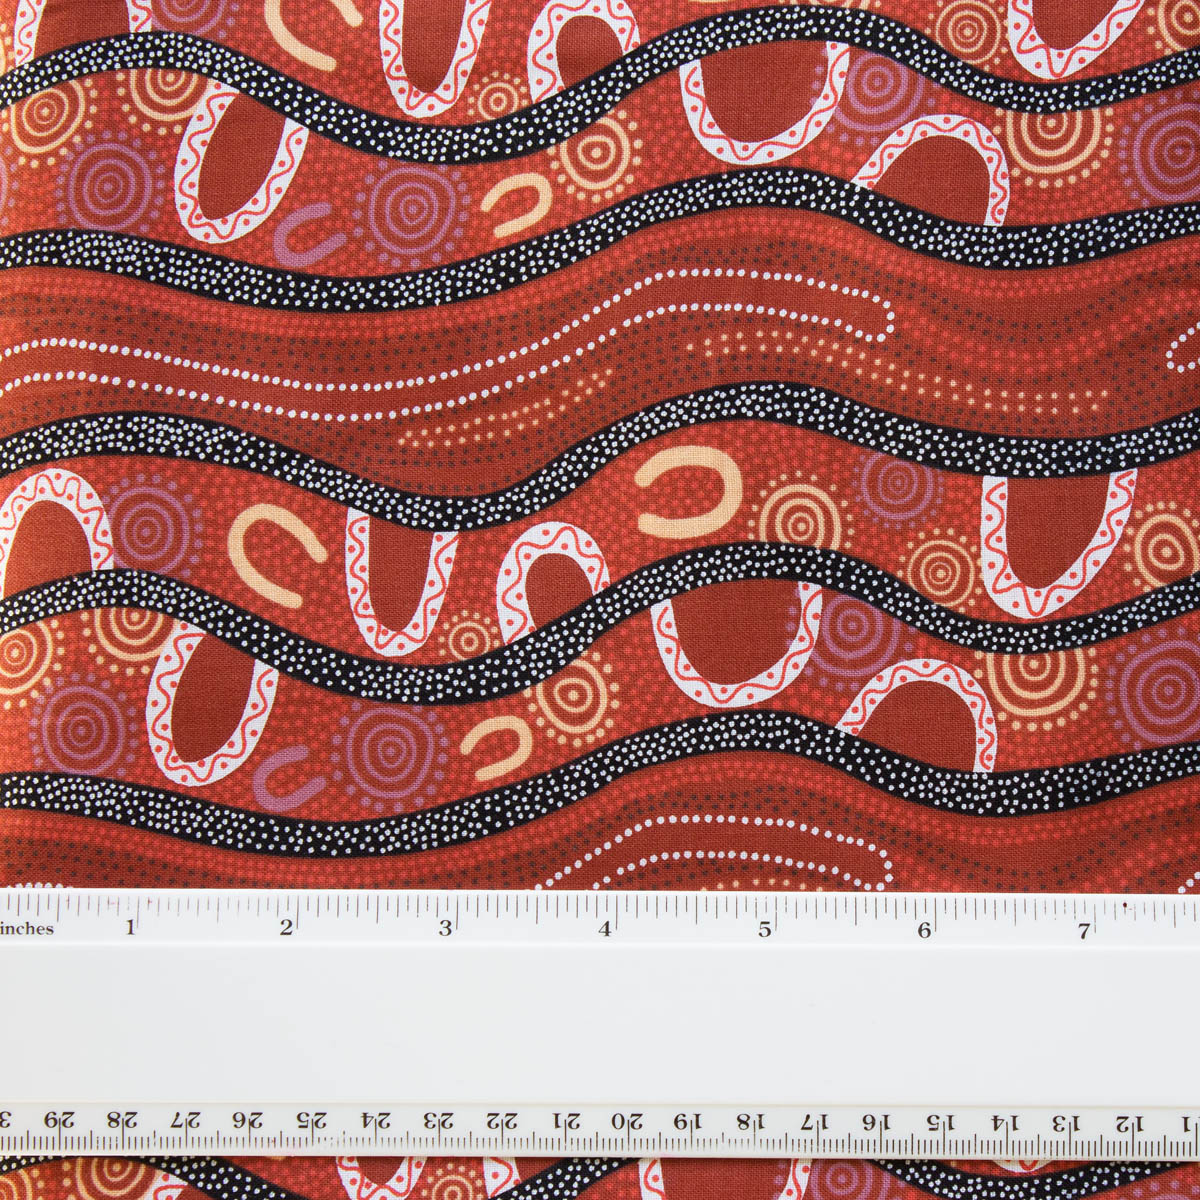 GATHERING BY THE RIVER BURGUNDY by Australian Aboriginal Artist BARBARA EGAN